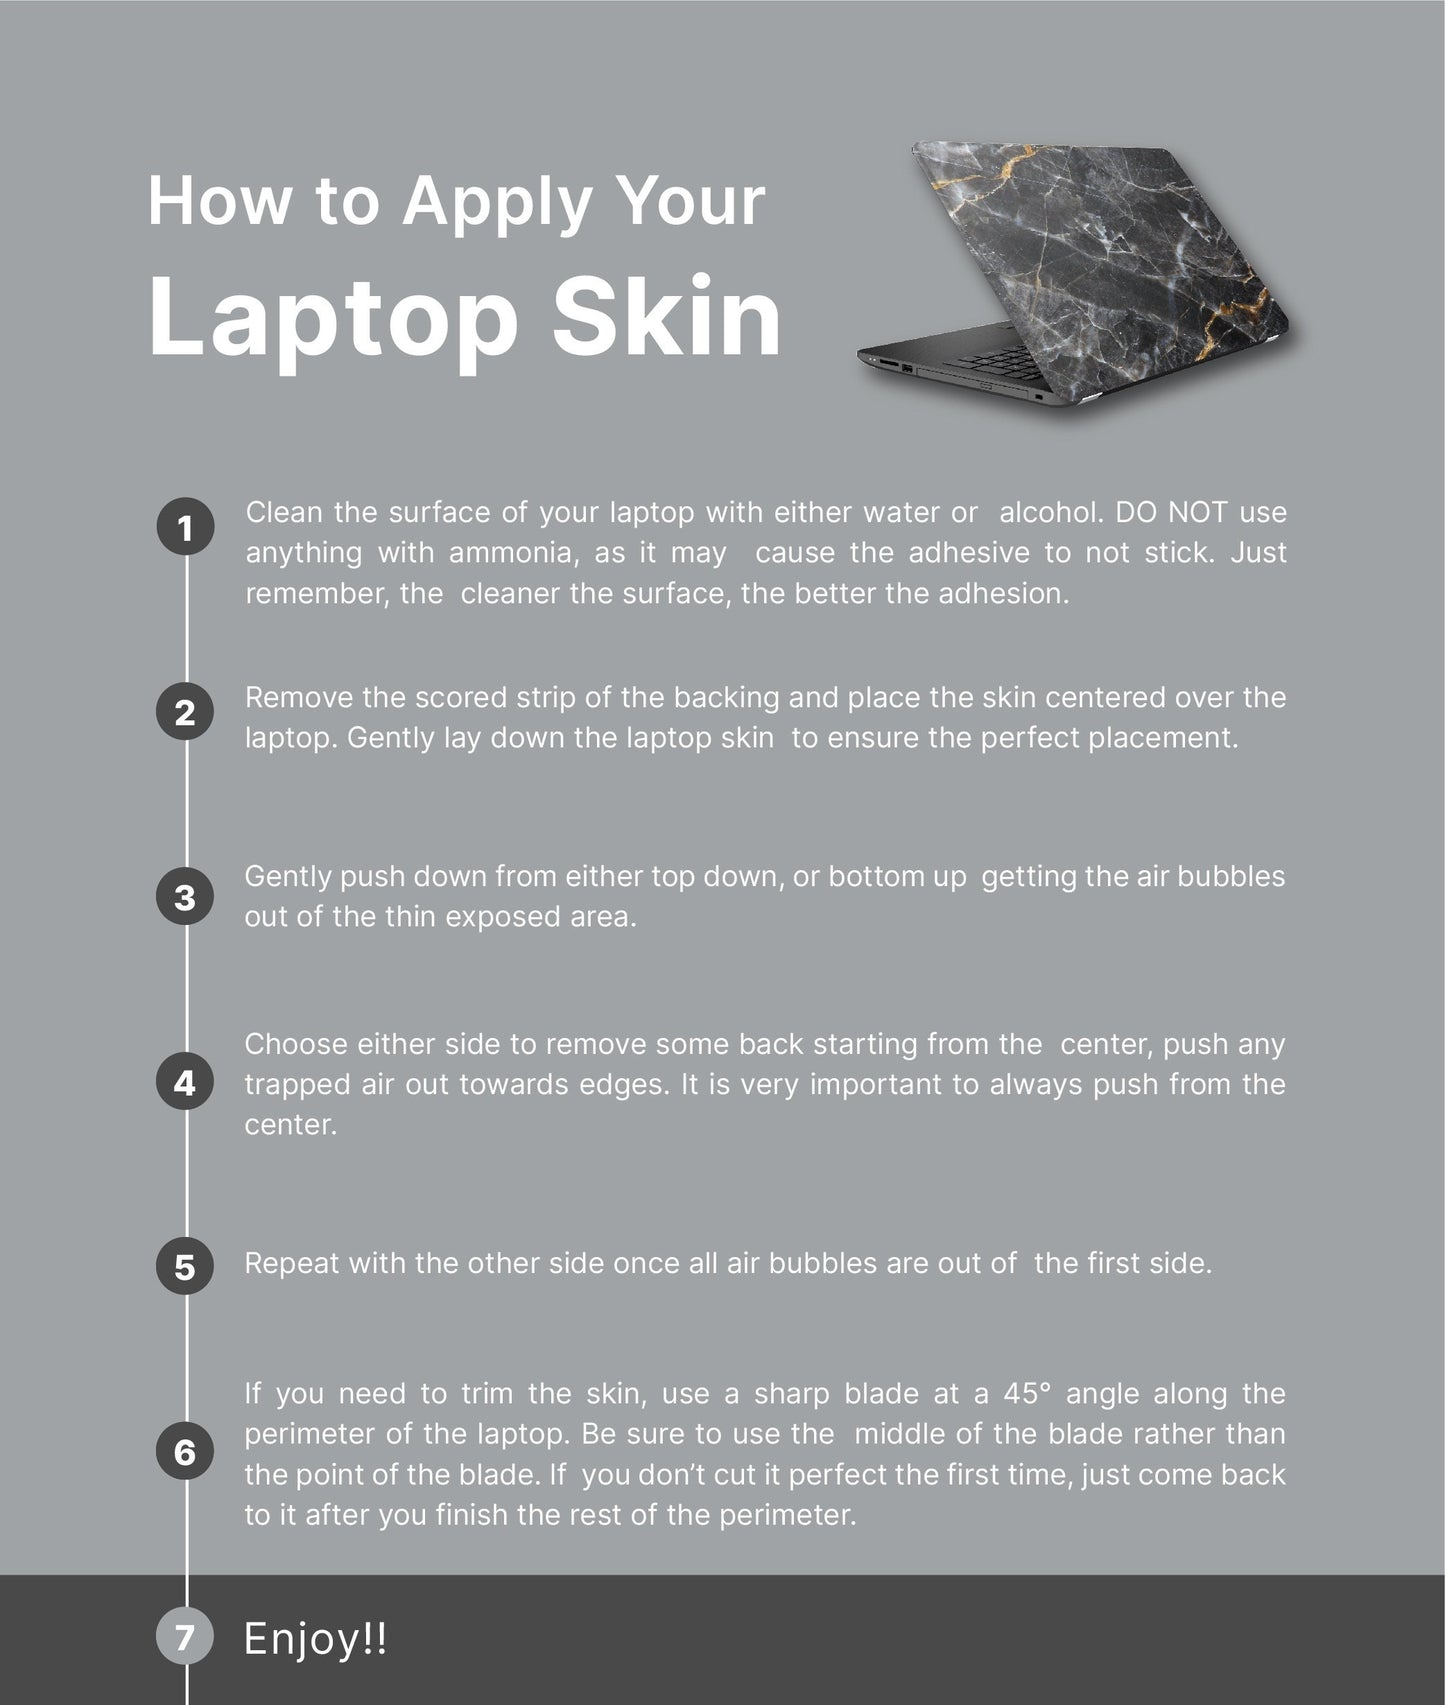 Floral Tropical Laptop Skin, Laptop Cover, Laptop Skins, Removable Laptop Skins, Laptop Decal, Customized Laptop Skin, Laptop Stickers 165